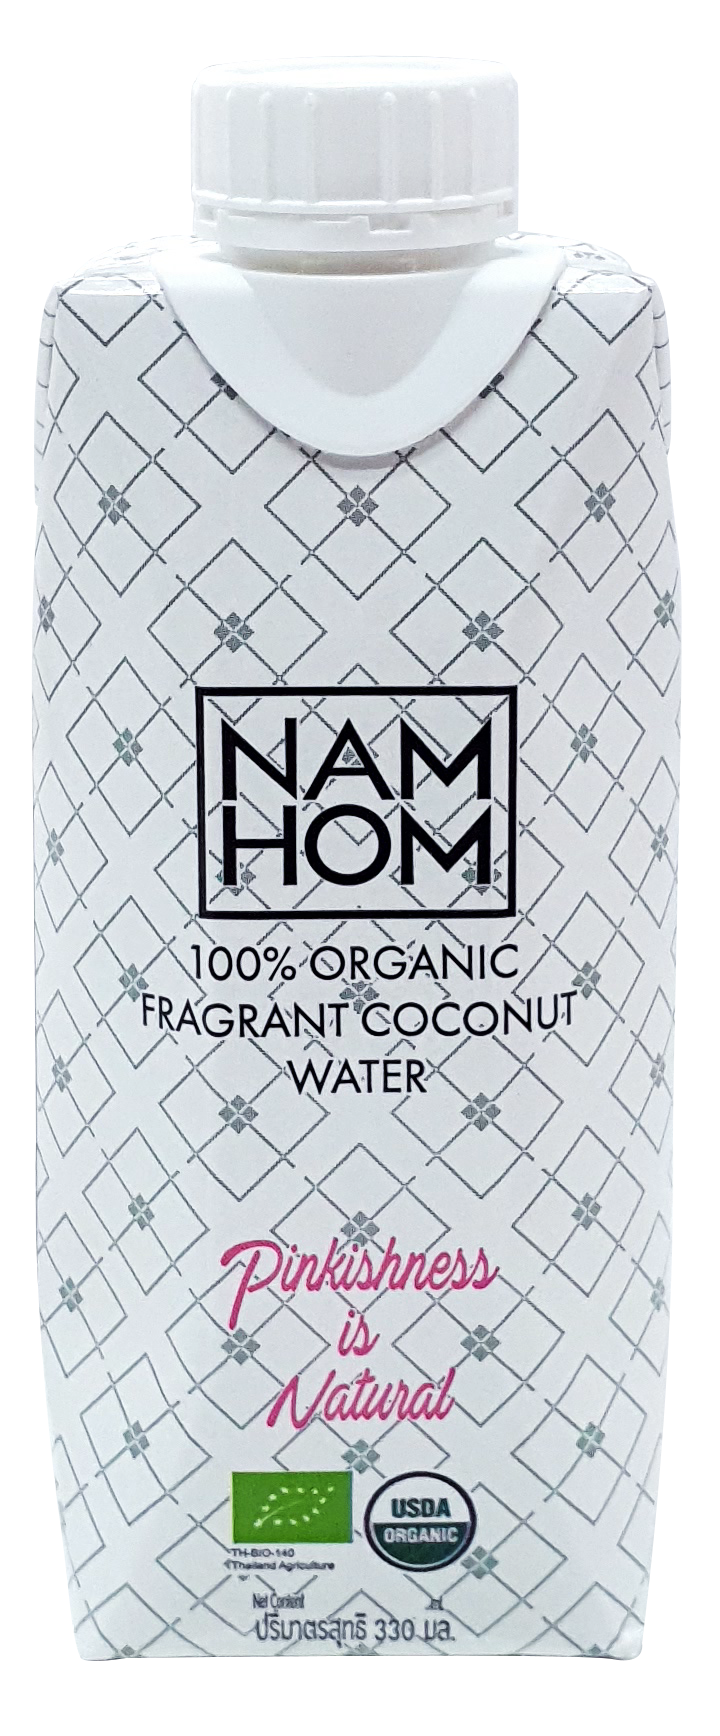 NAMHOM ORGANIC น้ำมะพร้าวน้ำหอม ออร์แกนิค 100% 1 ลัง (12 กล่อง)